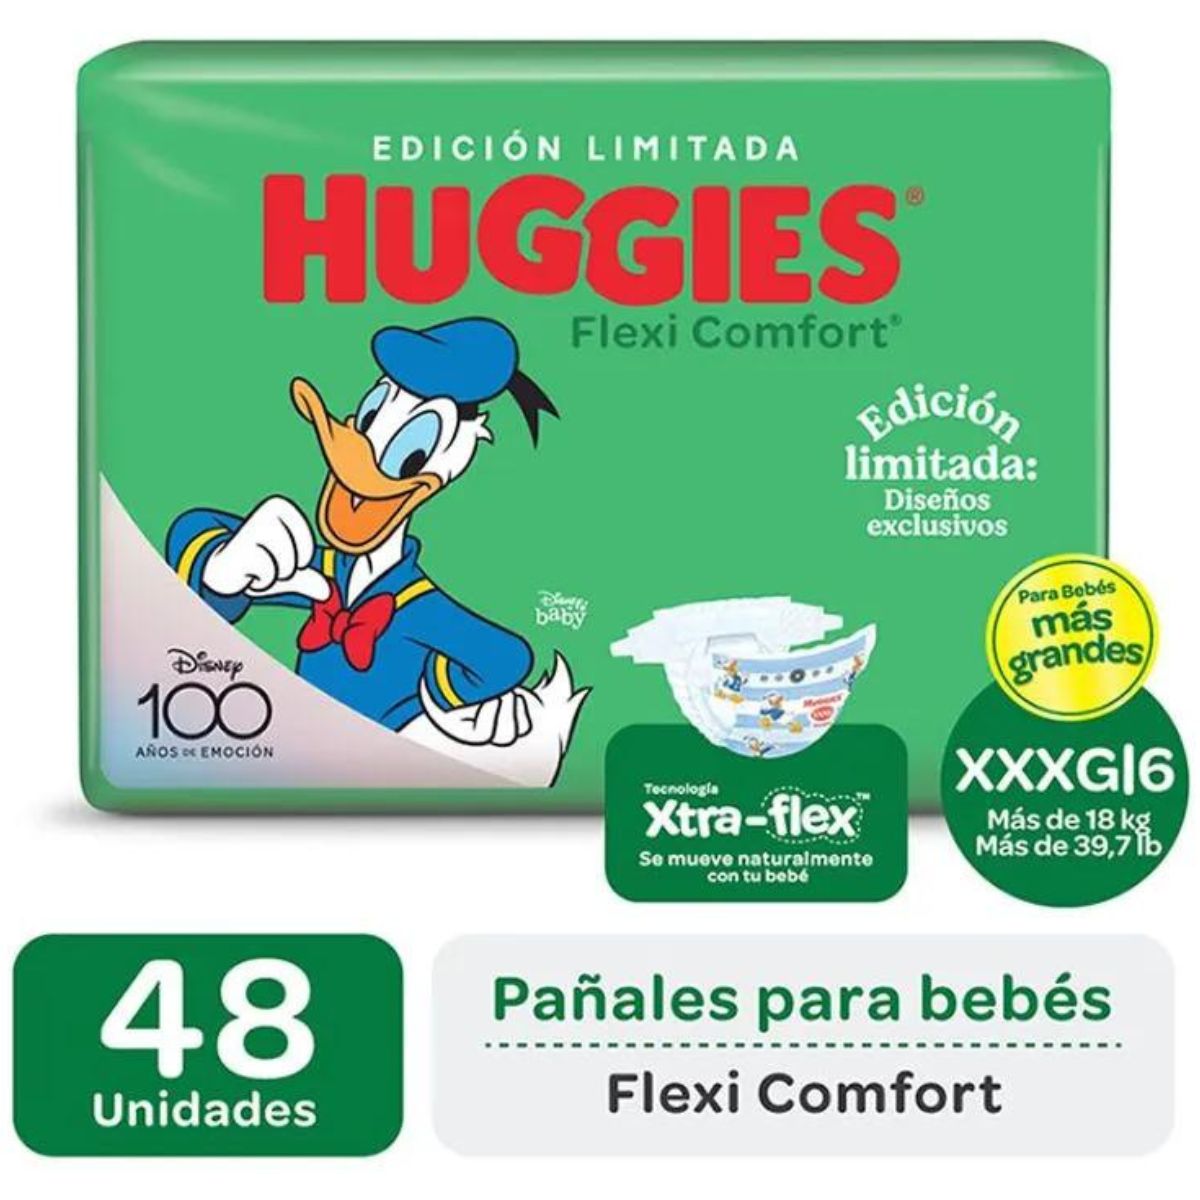 Imagen 1 de 3 de Pañales Huggies Flexi Comfort XXXG x48 unidades